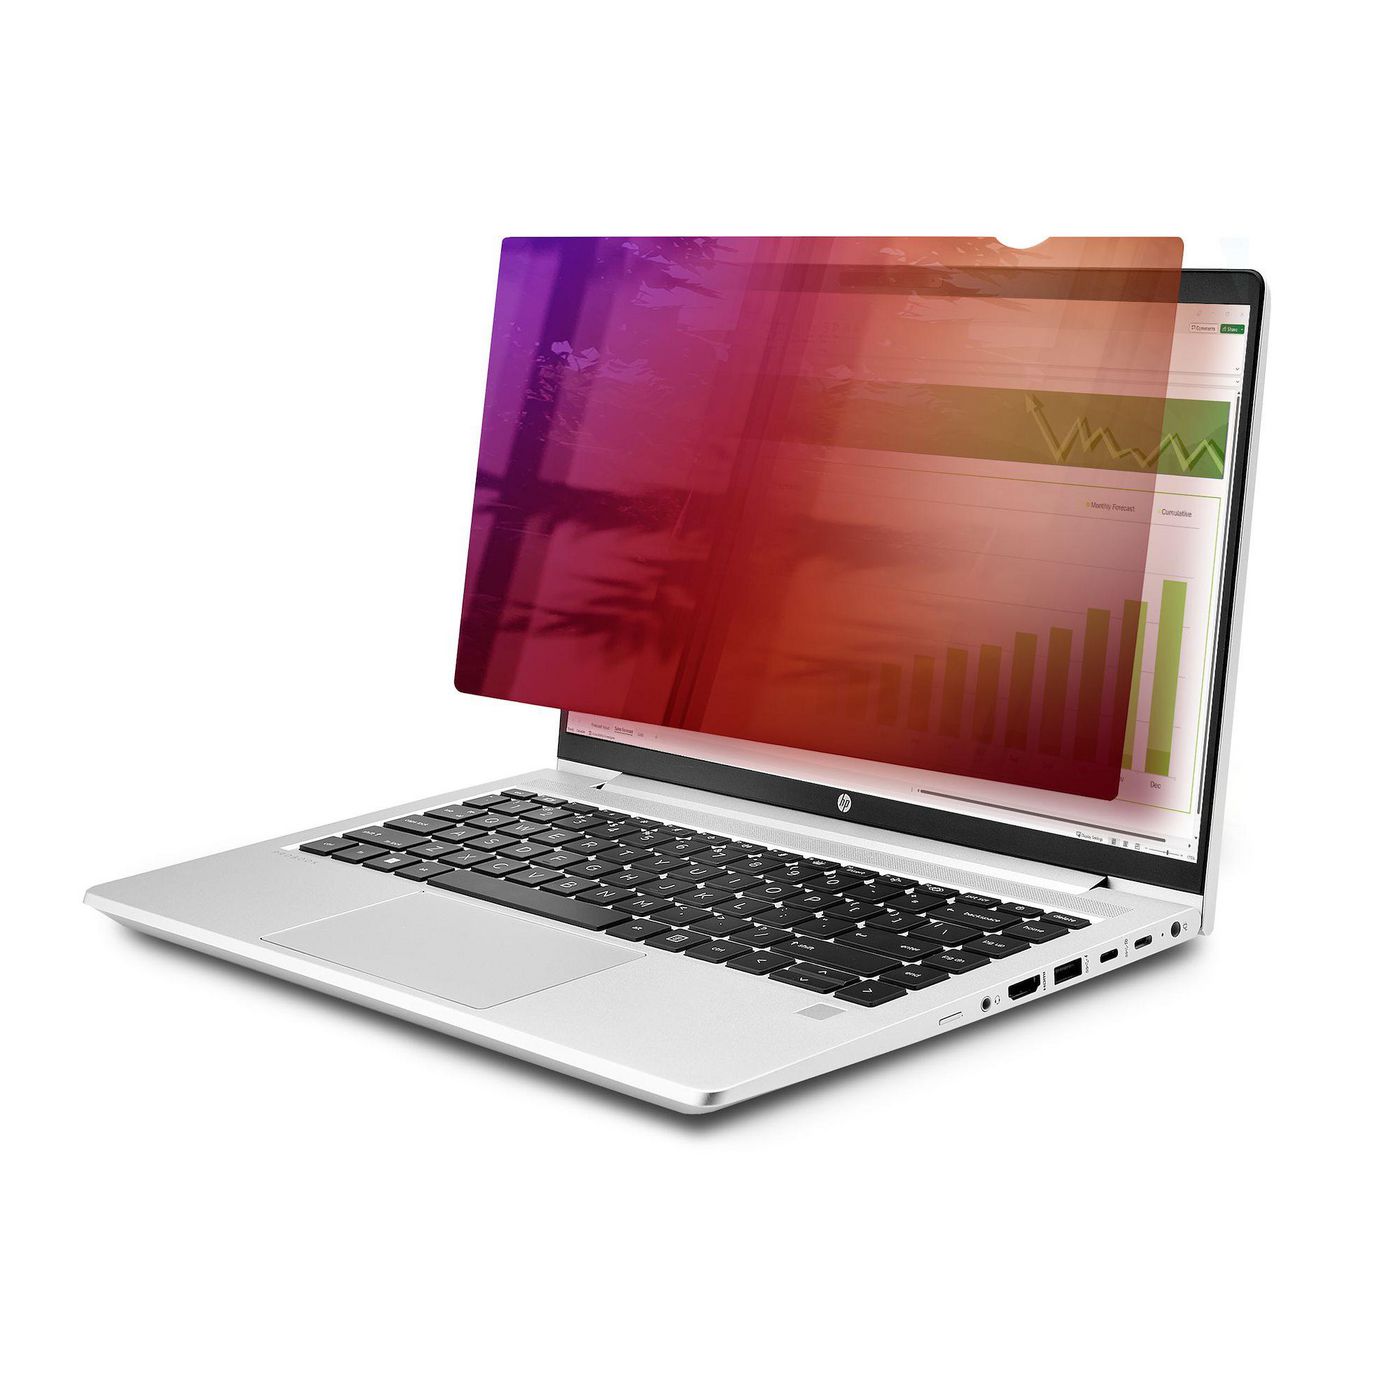 StarTechcom 156G-PRIVACY-SCREEN W128827588 15.6-Inch 16:9 Gold Laptop 